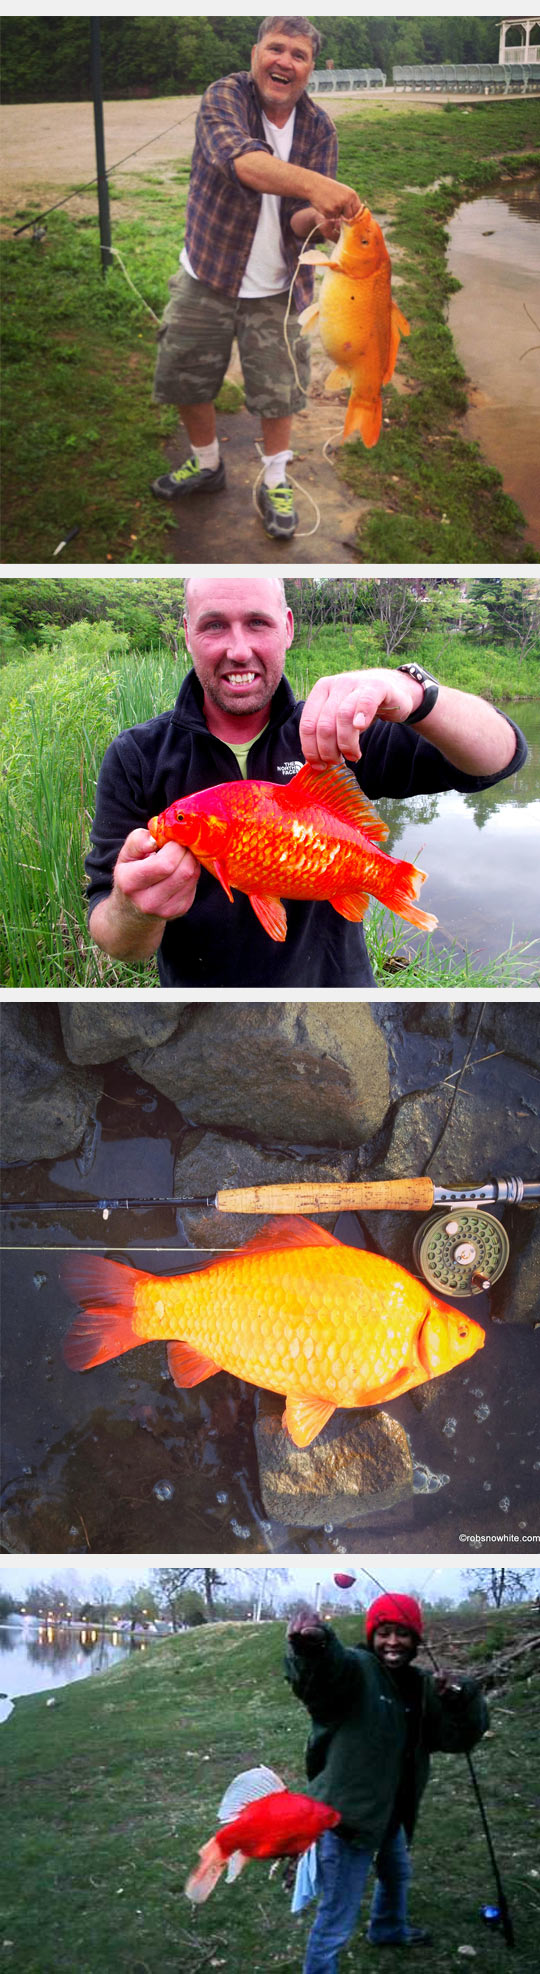 2funny-goldfish-fishing-lake-wood-kid